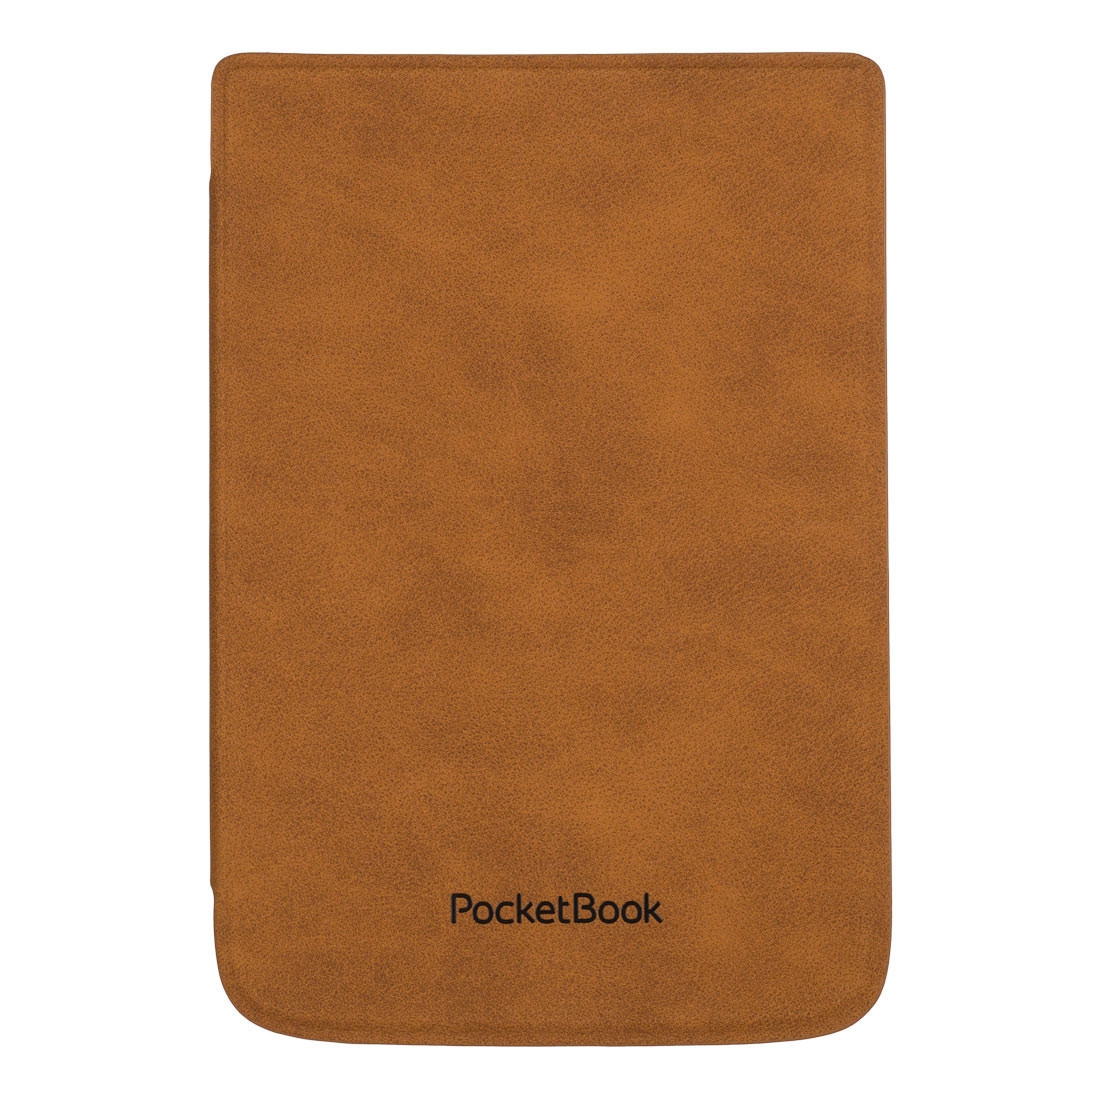 Etui PocketBook do modeli Lux 4, Touch HD 3 i Basic Lux 2 brązowe